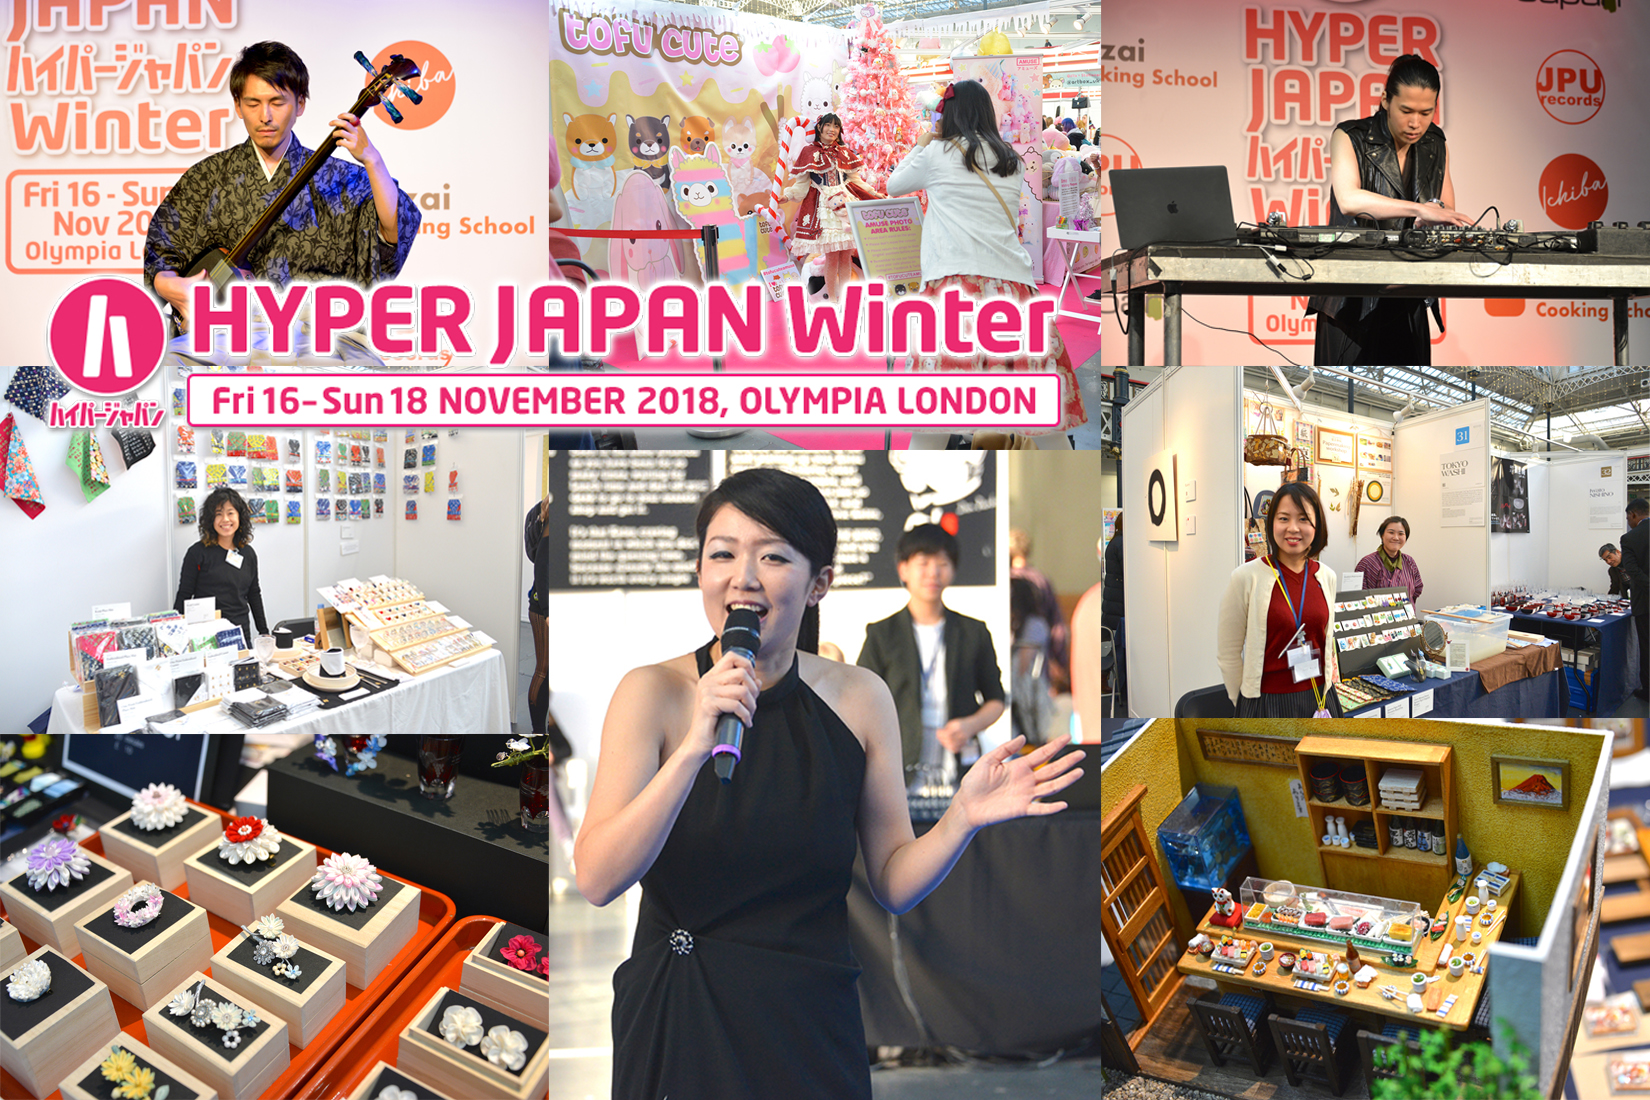 20181213 [HYPER JAPAN] 『HYPER JAPAN 2018 WINTER』Special Reports ②